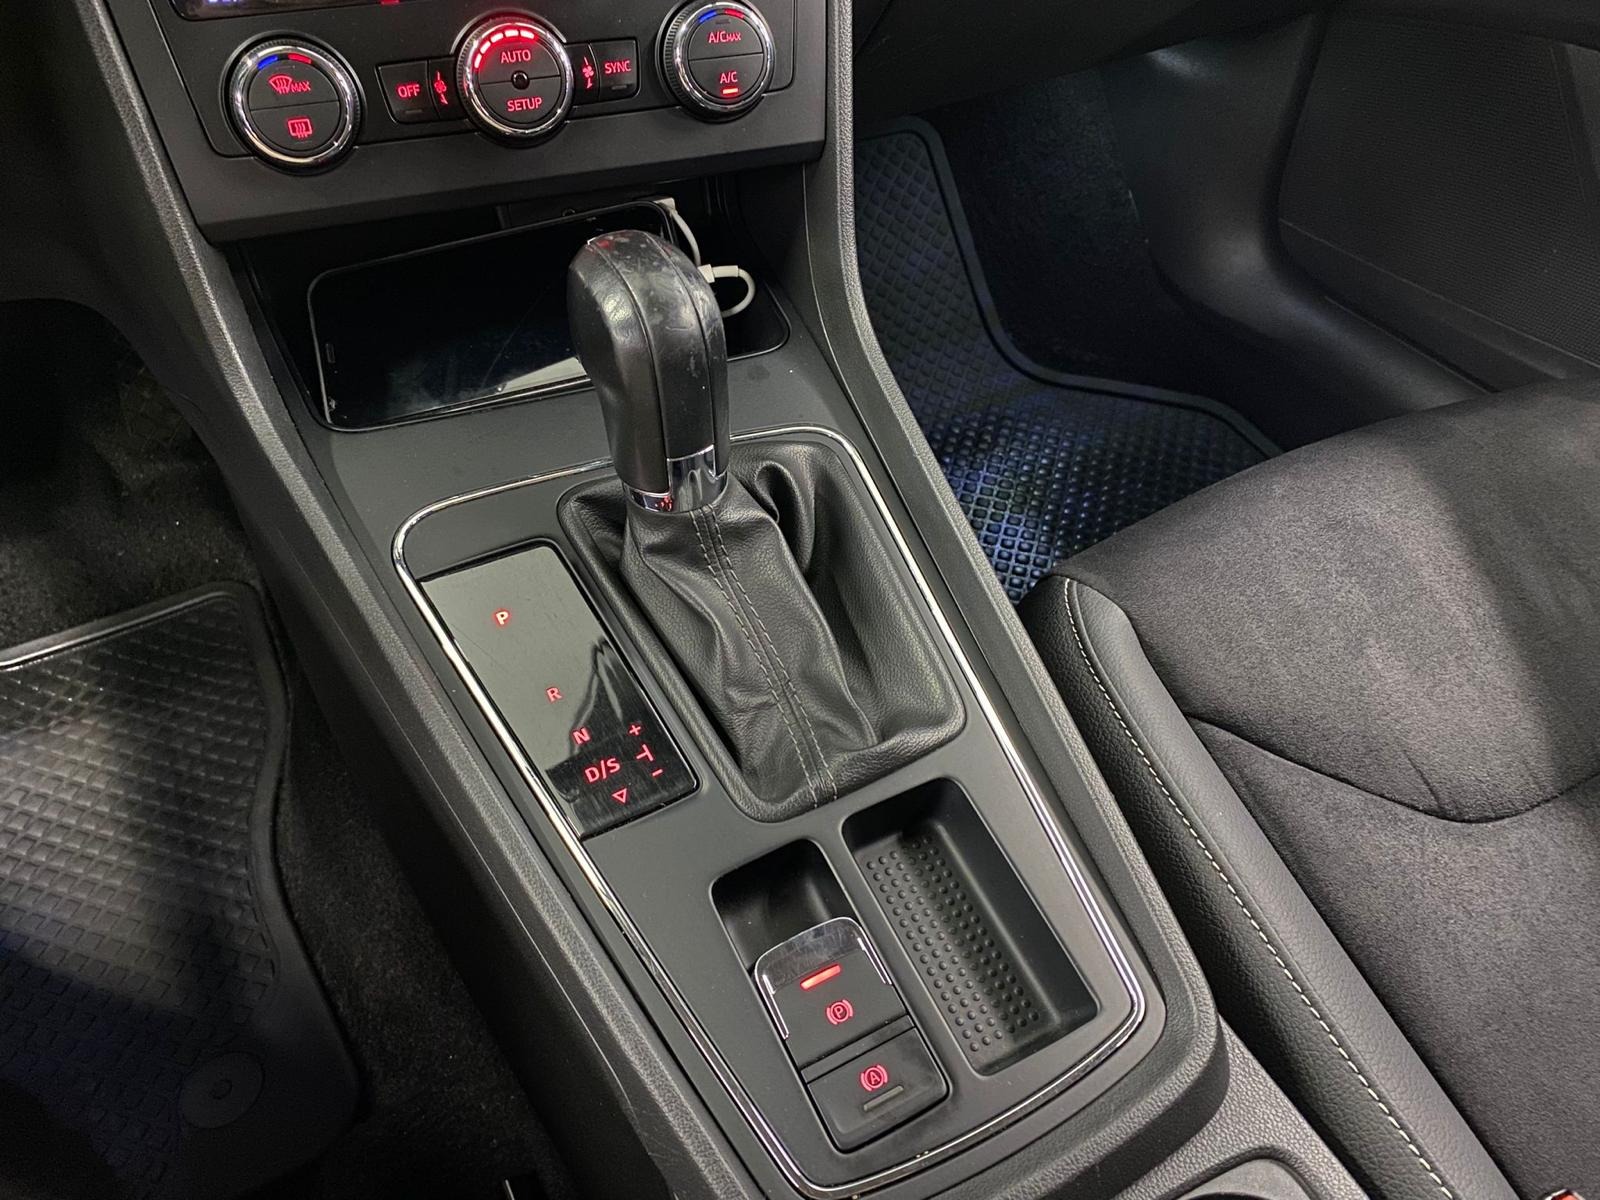 2017 Model Seat 1.6 TDI 115 Ps Style-19